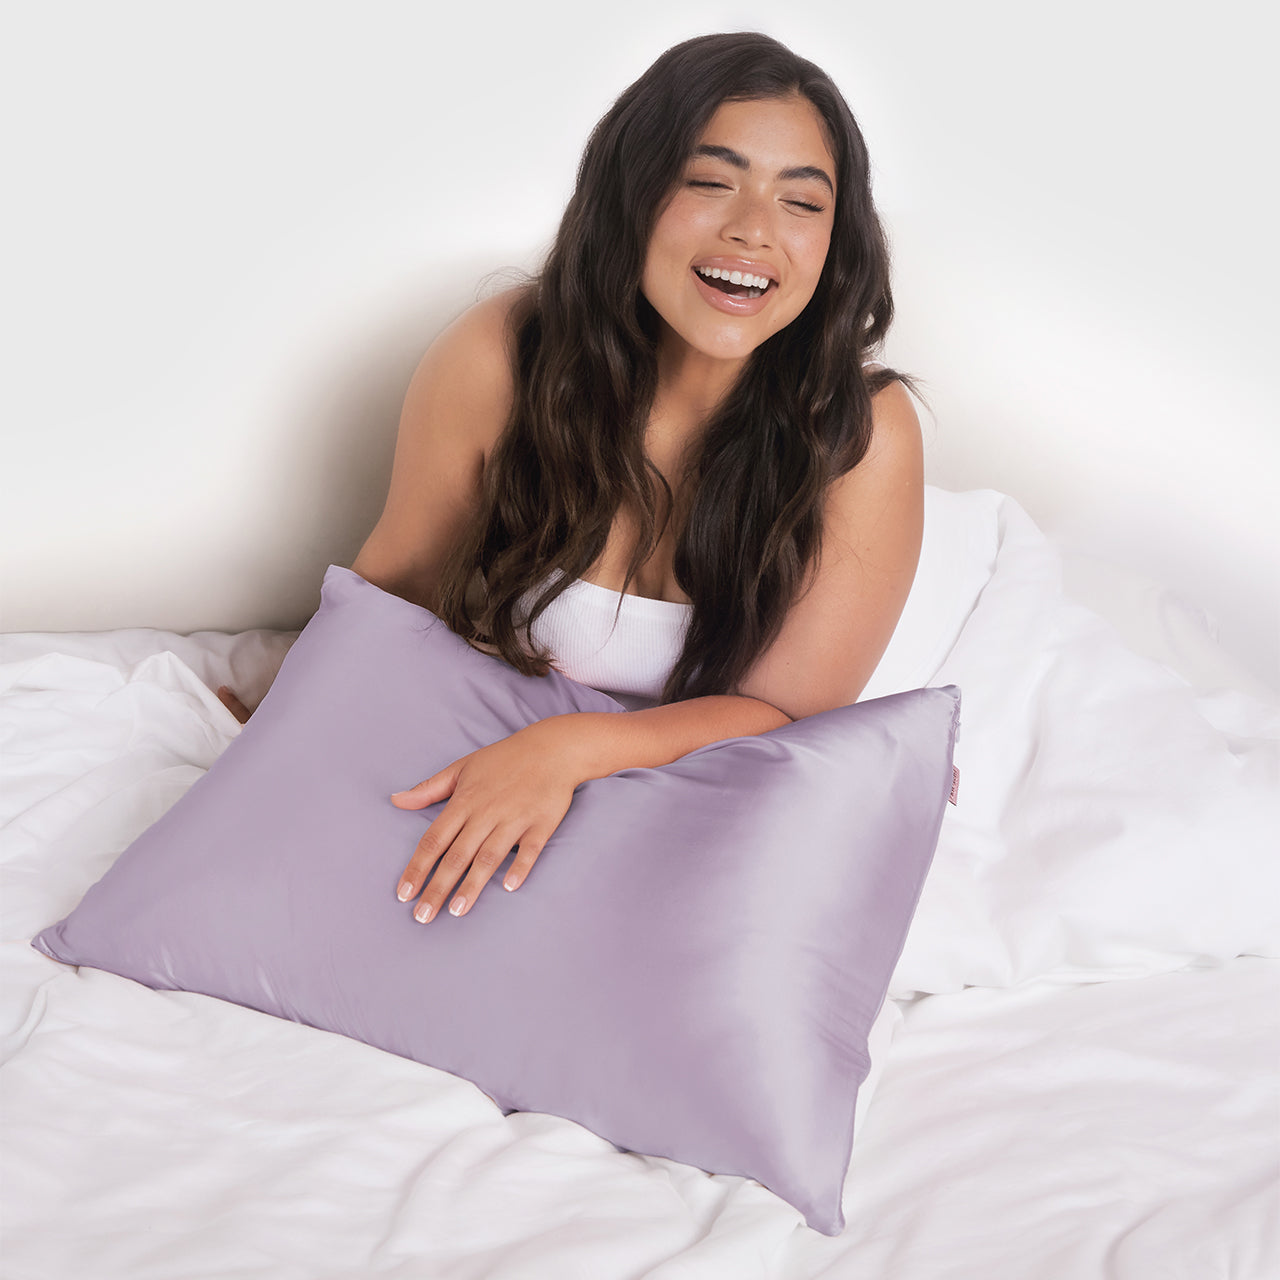 Pillowcase - Lavender - Standard